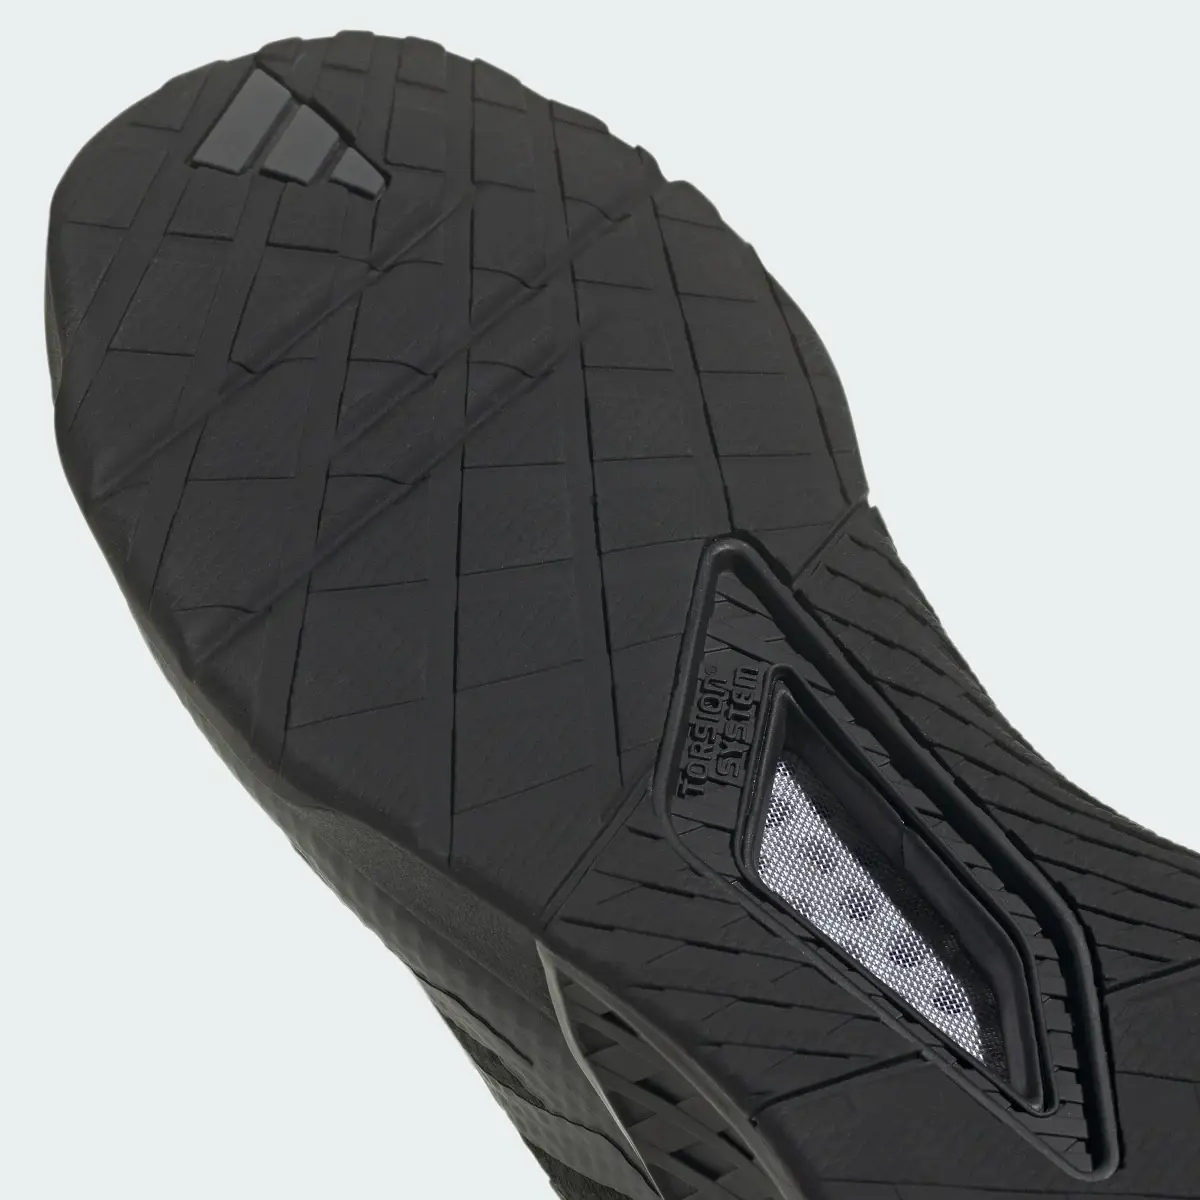 Adidas Dropset 2 Training Shoes. 3